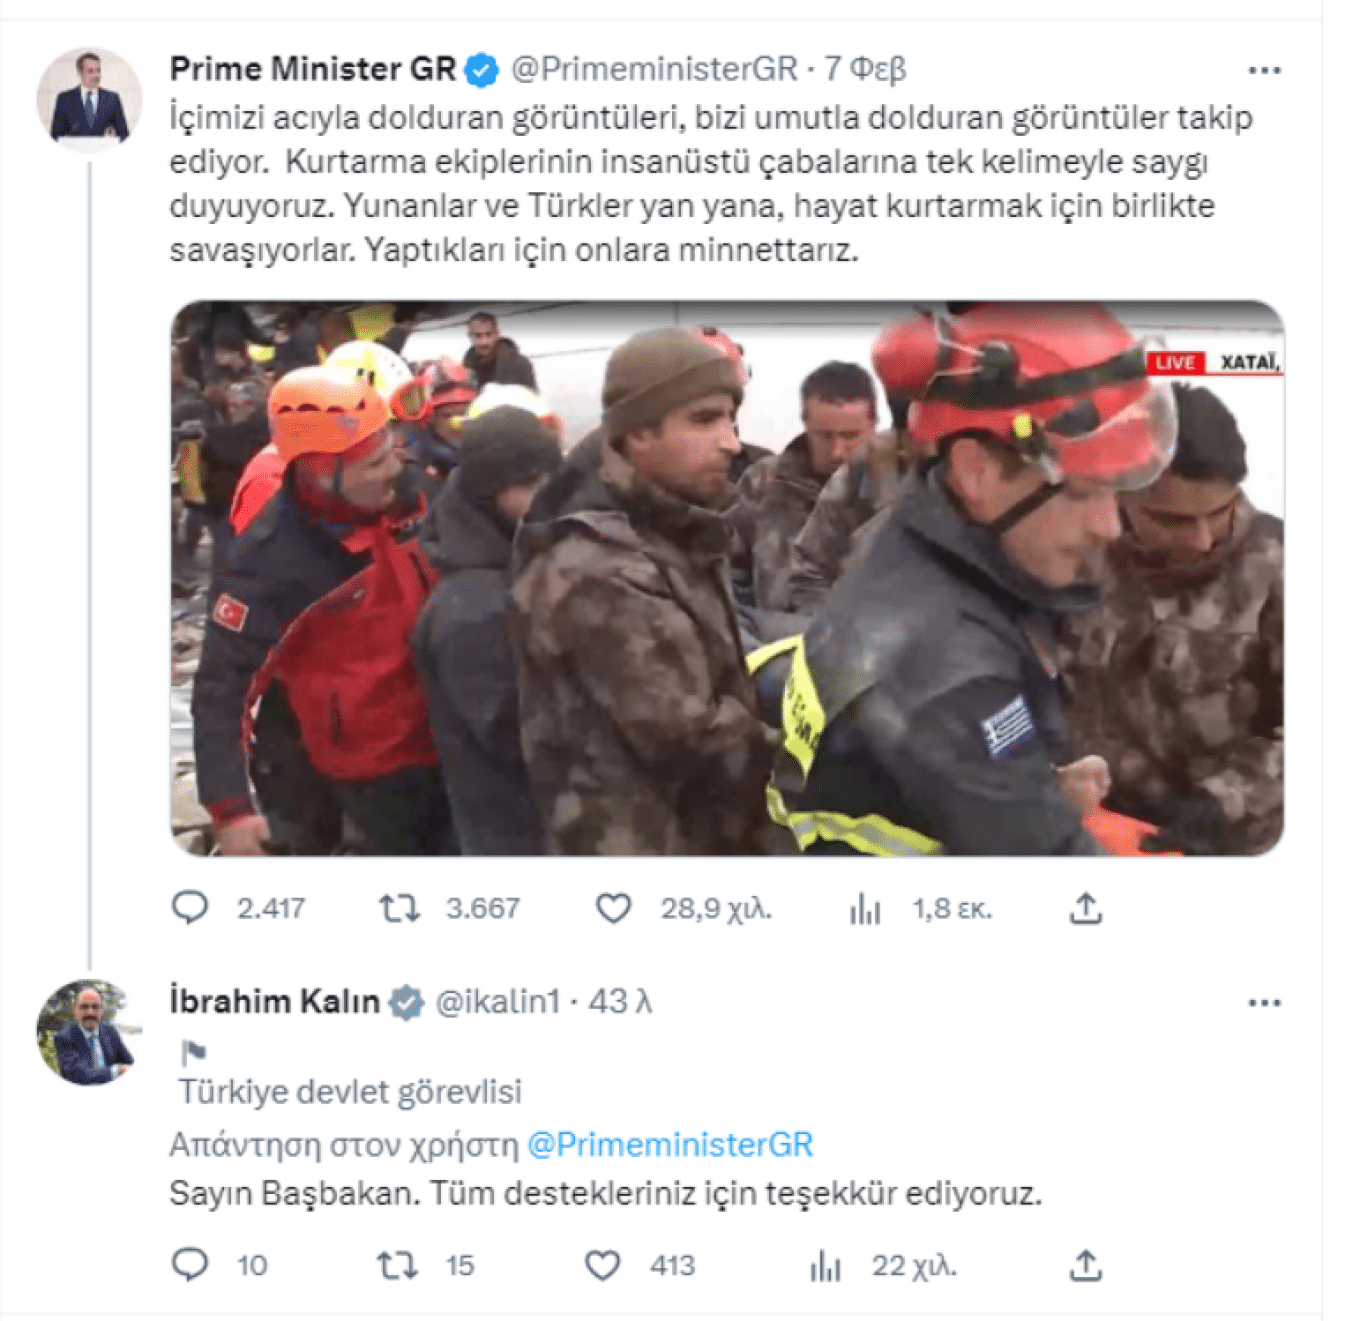 kalin mitsotakis - Μεγαλύτερη ευελιξία και κονδύλια για το Μεταναστευτικό ζητά η Ελλάδα στις Βρυξέλλες - Το «ευχαριστώ» του Καλίν για τη βοήθεια στην Τουρκία